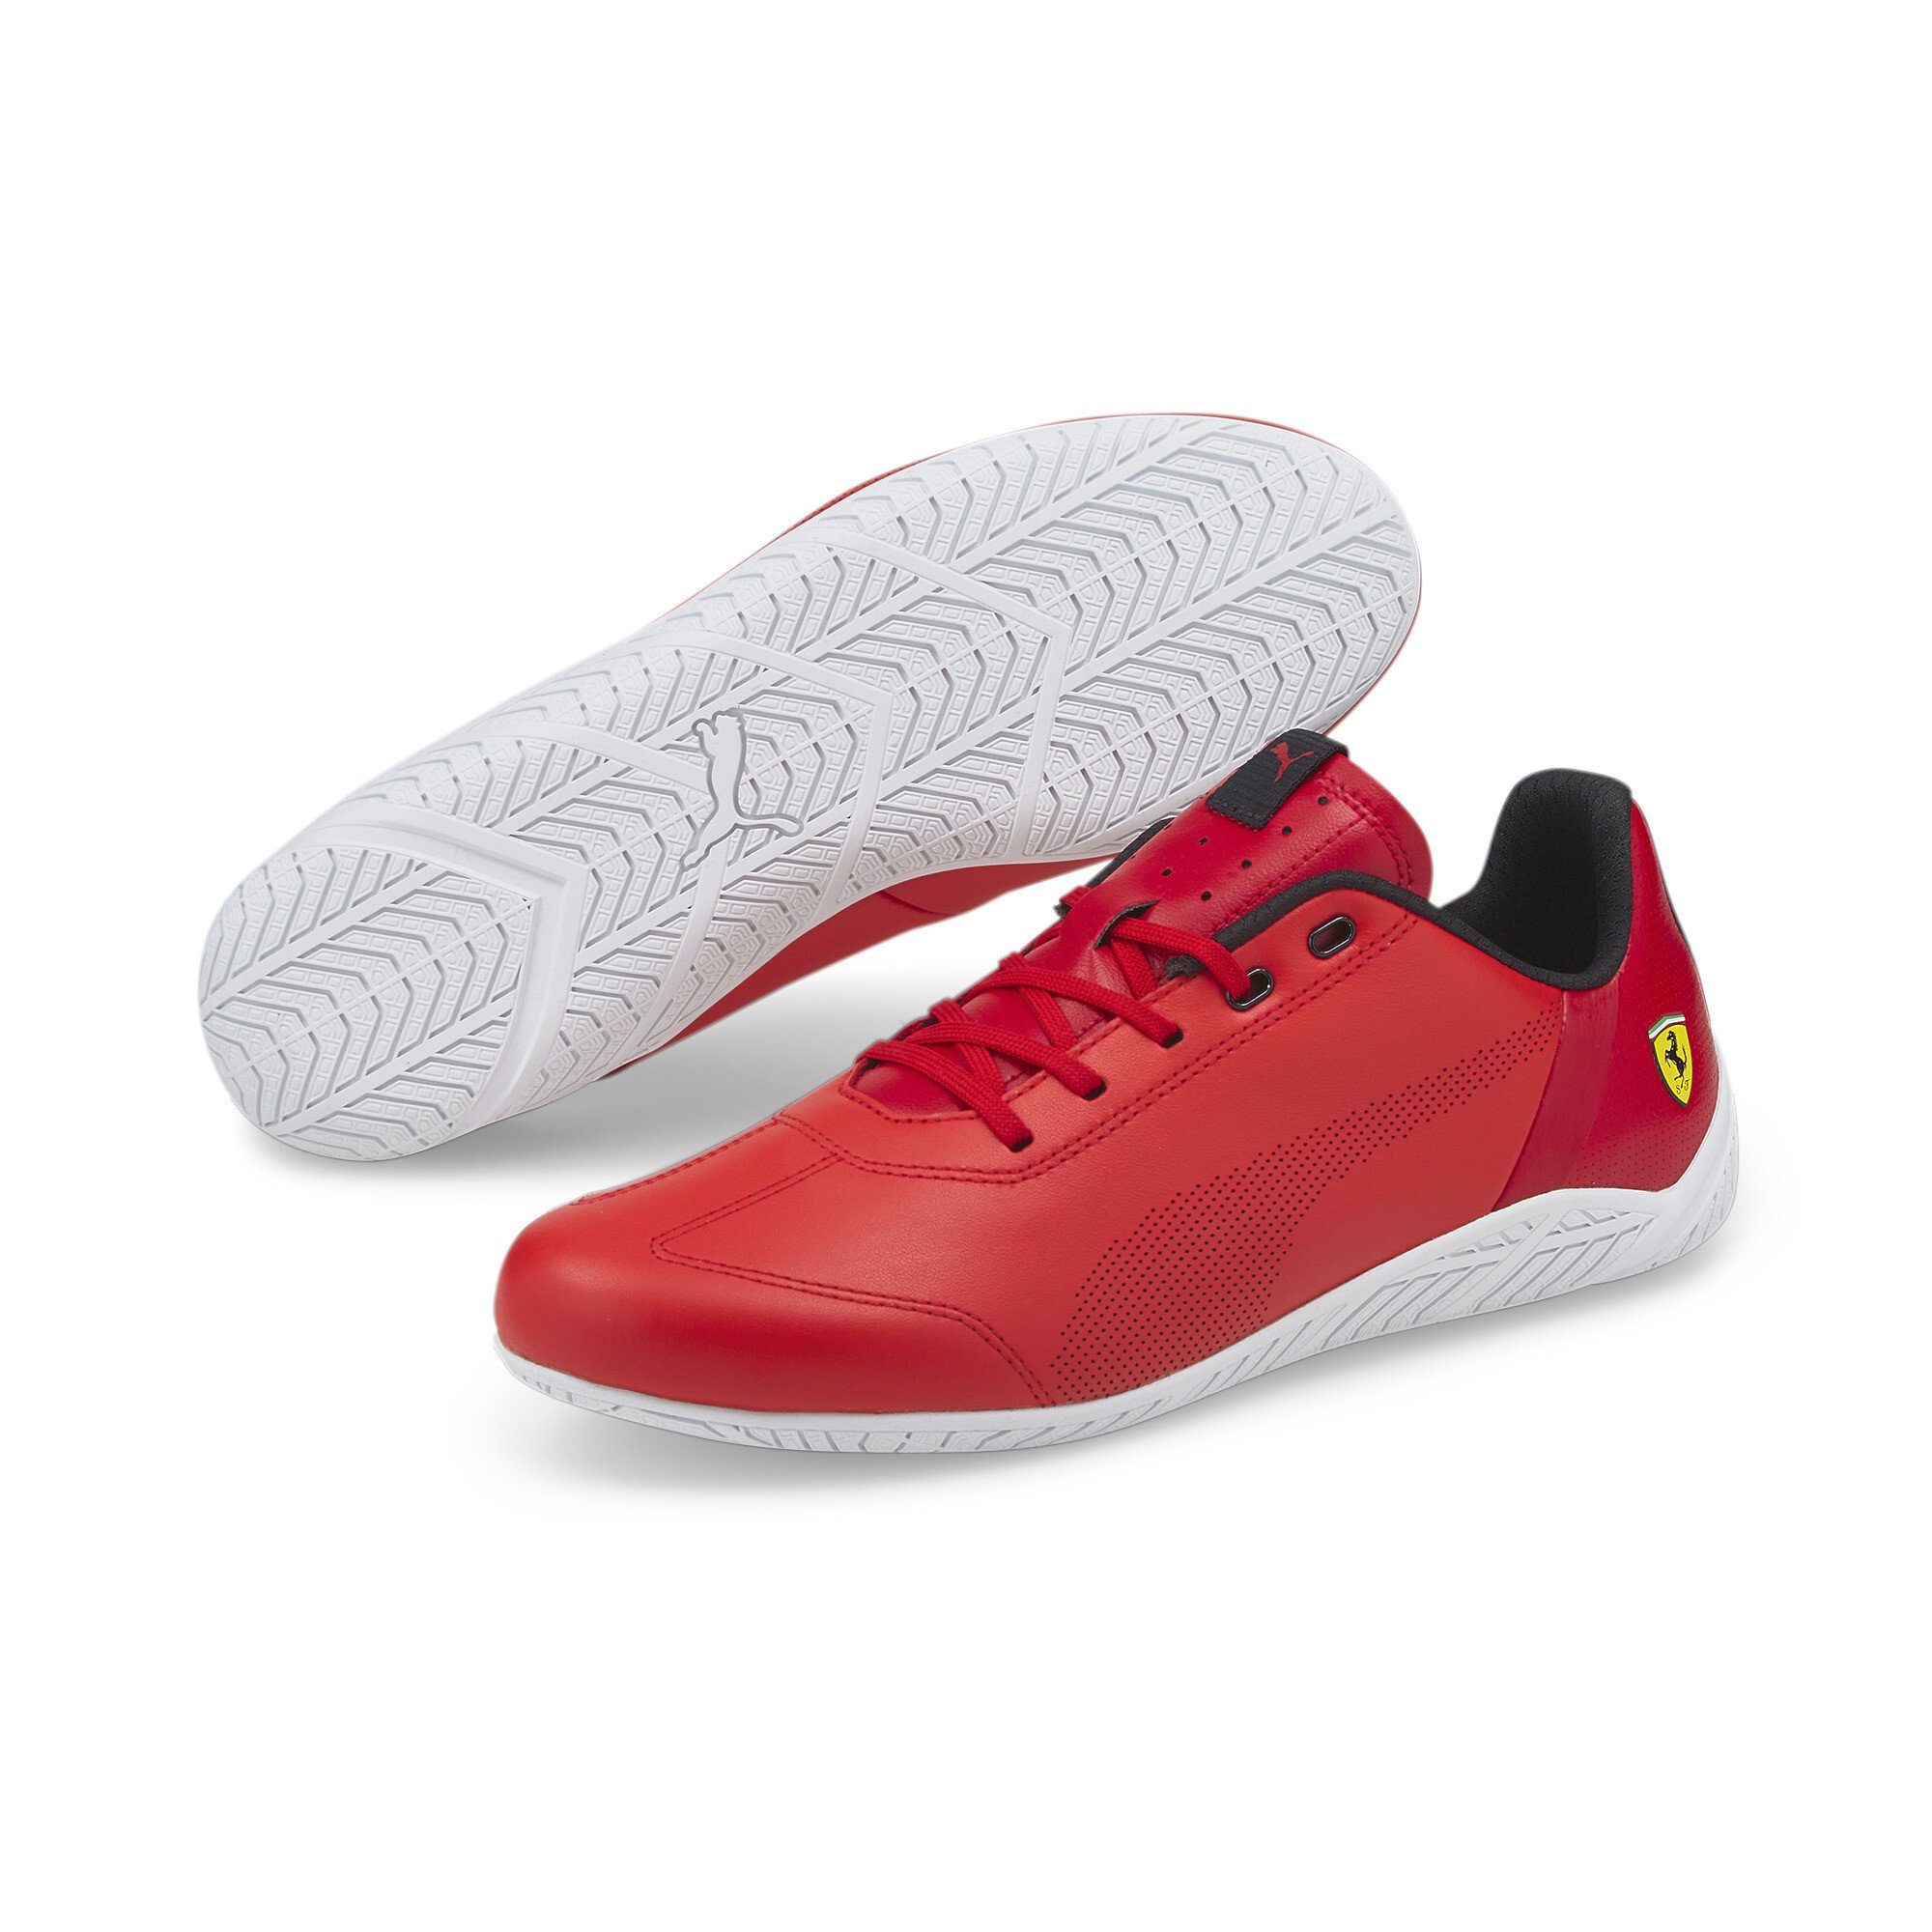 Rote Herren-Sneaker online kaufen | OTTO